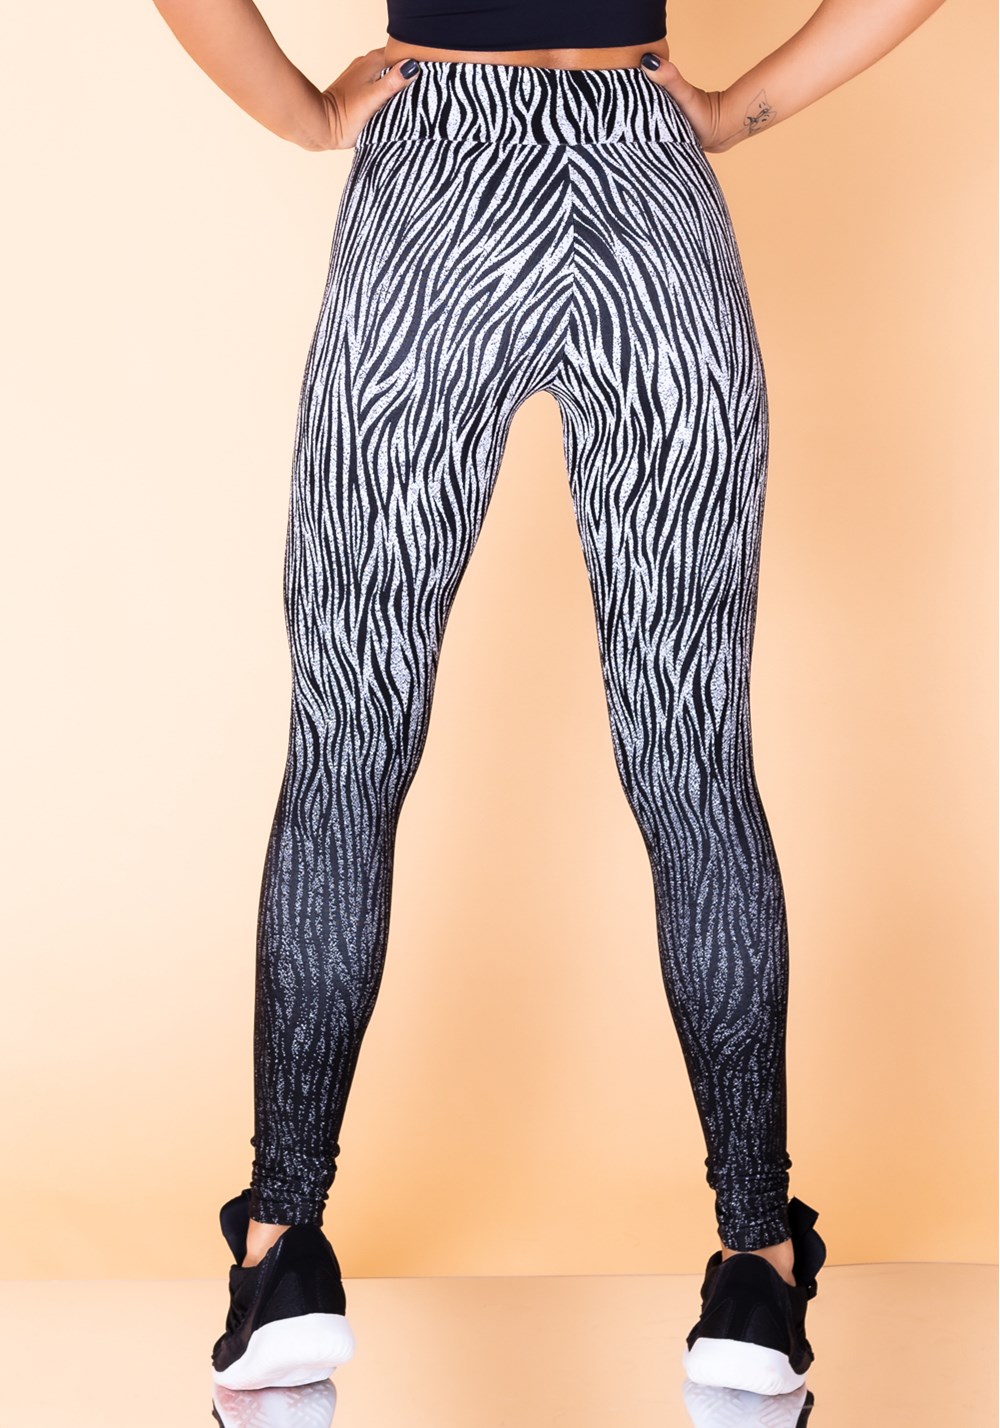 Calça Legging Adidas Capri Zebra Feminina - Calça Legging